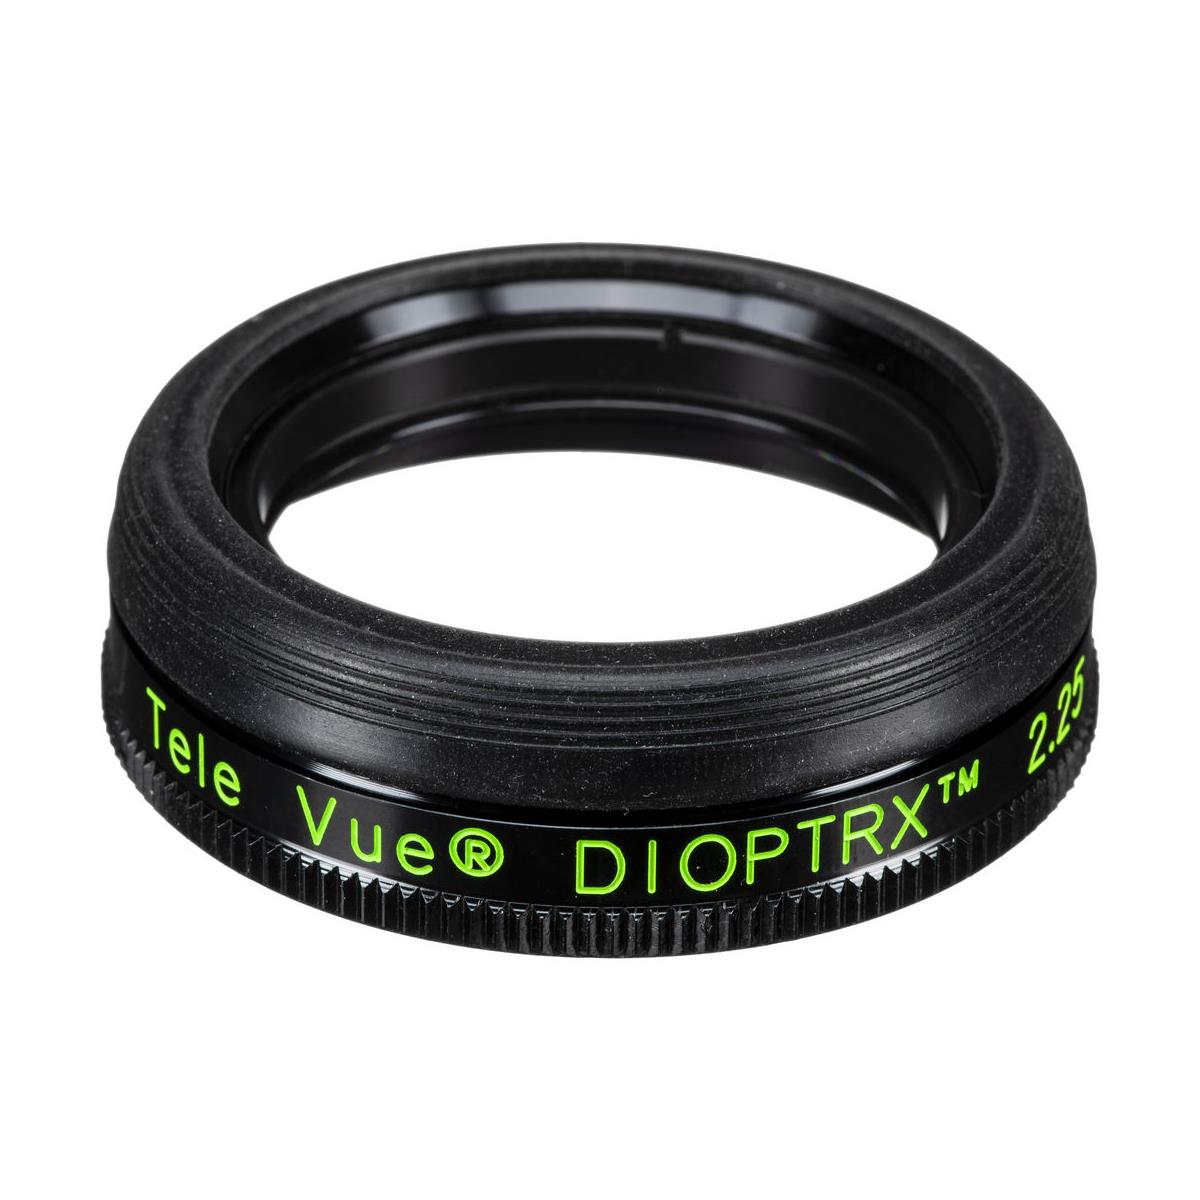 Image of Tele Vue Dioptrx Astigmatism Correcting Lens - 2.25